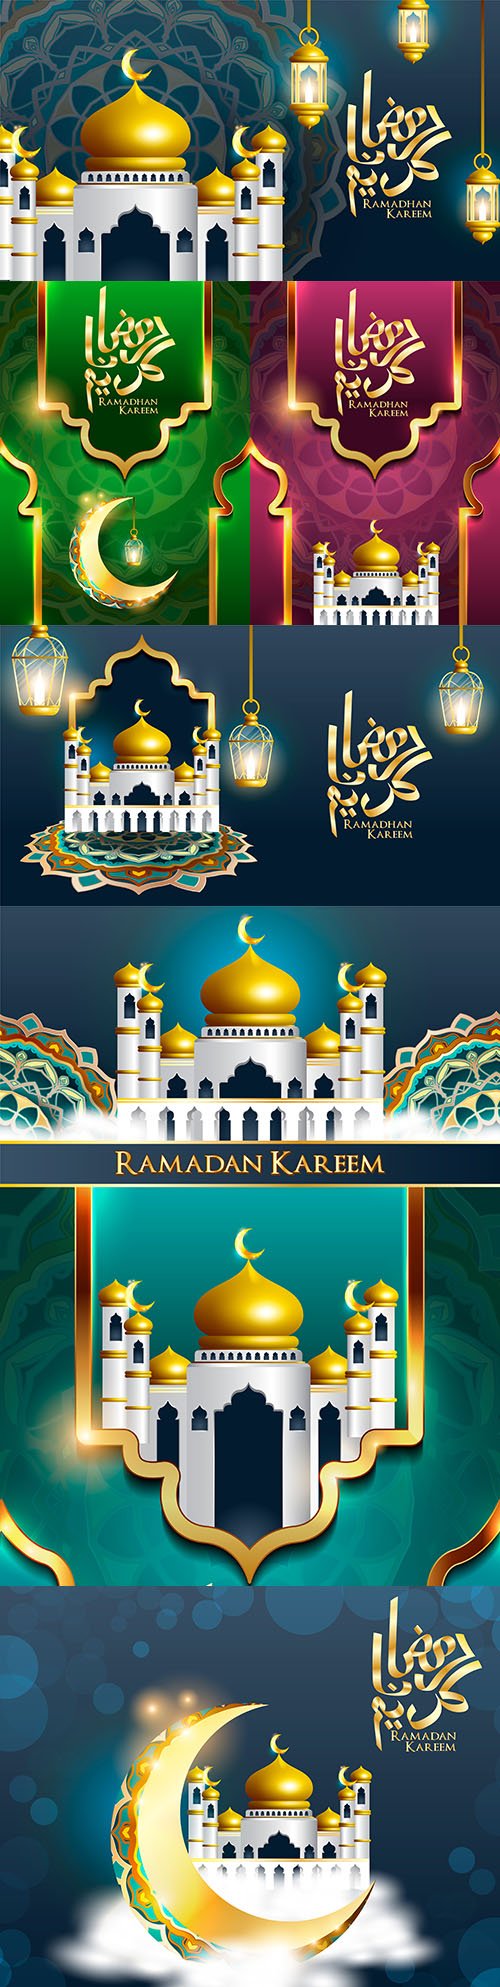 Ramadan Kareem banner golden mosque illustration